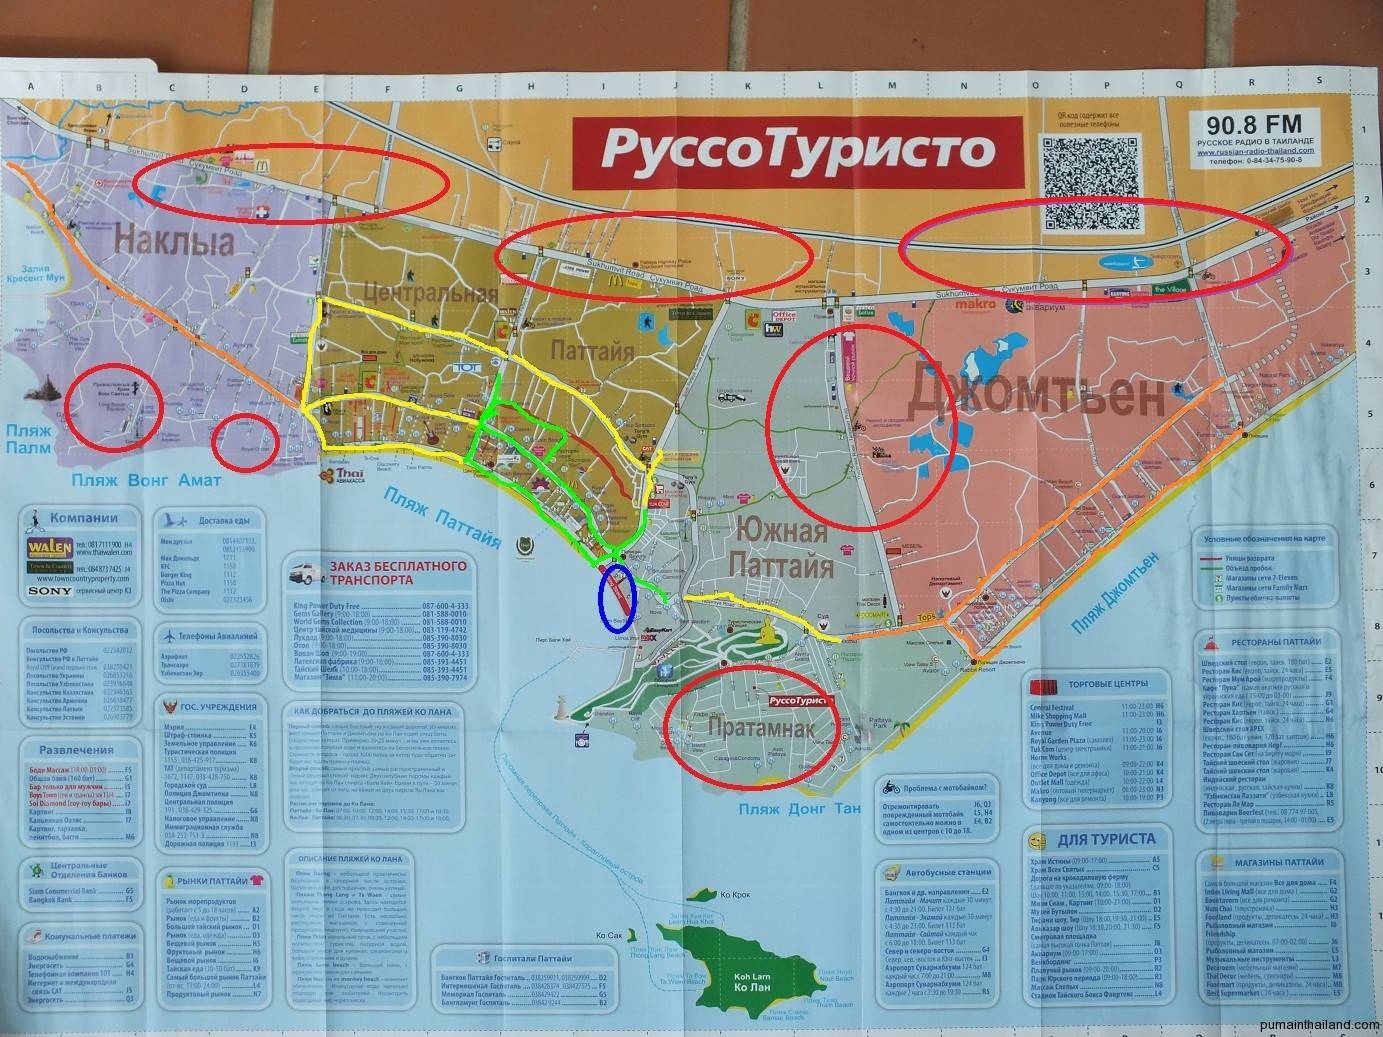 Рынки в паттайе на карте. Паттайя Джомтьен карта. Терминал 21 Паттайя на карте. Карта Паттайи на русском. Военный пляж в Паттайе на карте.